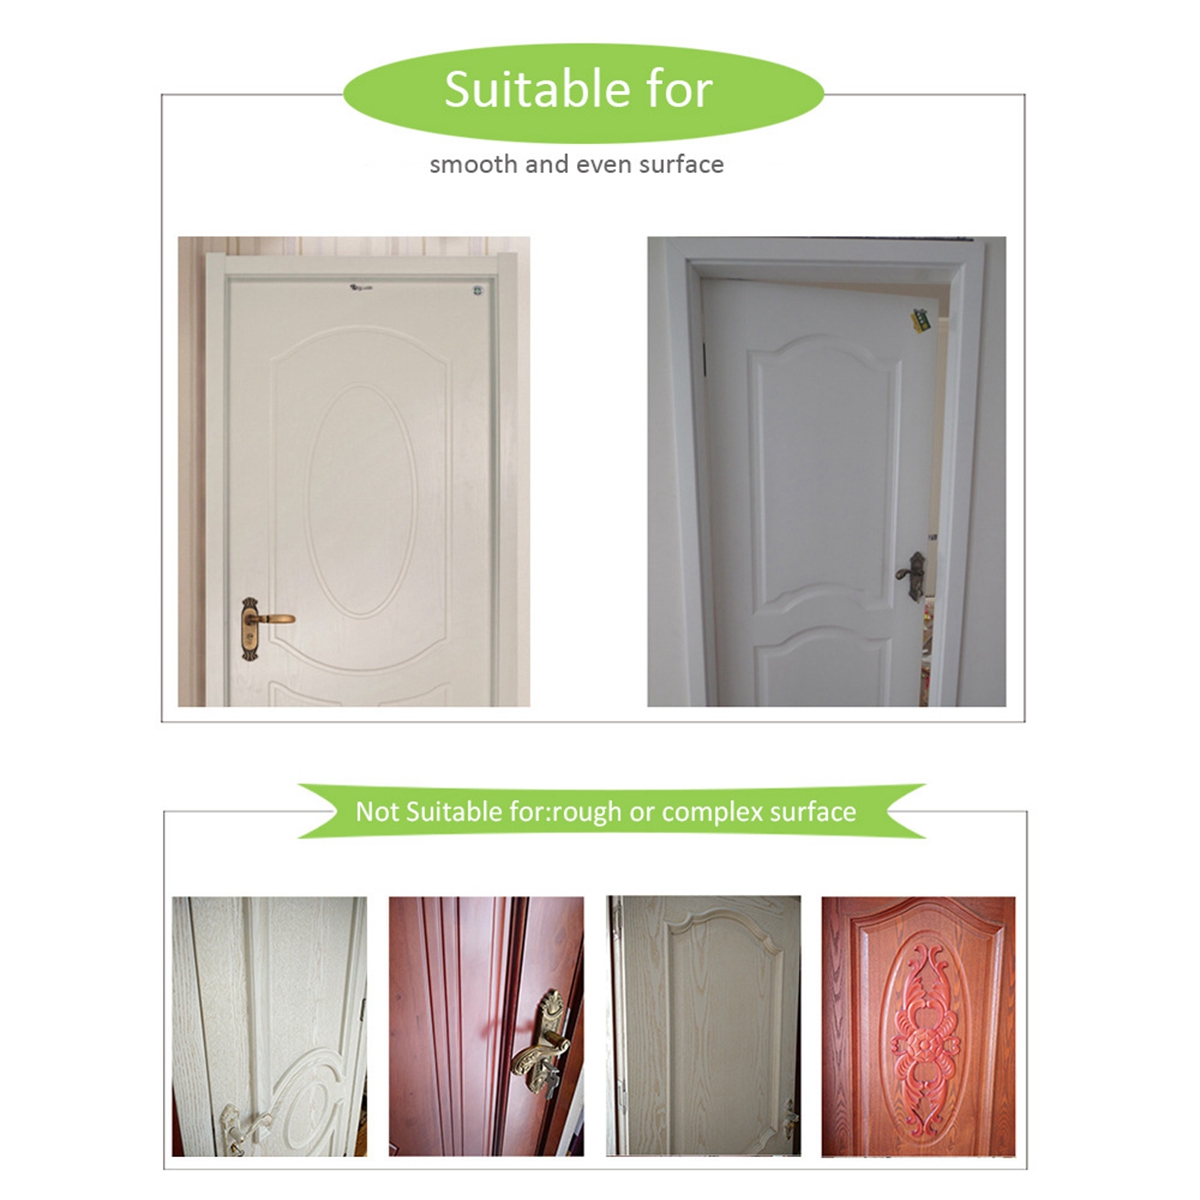 Iron-Gate-Sticker-PVC-Self-Adhesive-Waterproof-Refrigerator-Door-Room-Cover-Wallpaper-Decal-1142761-3